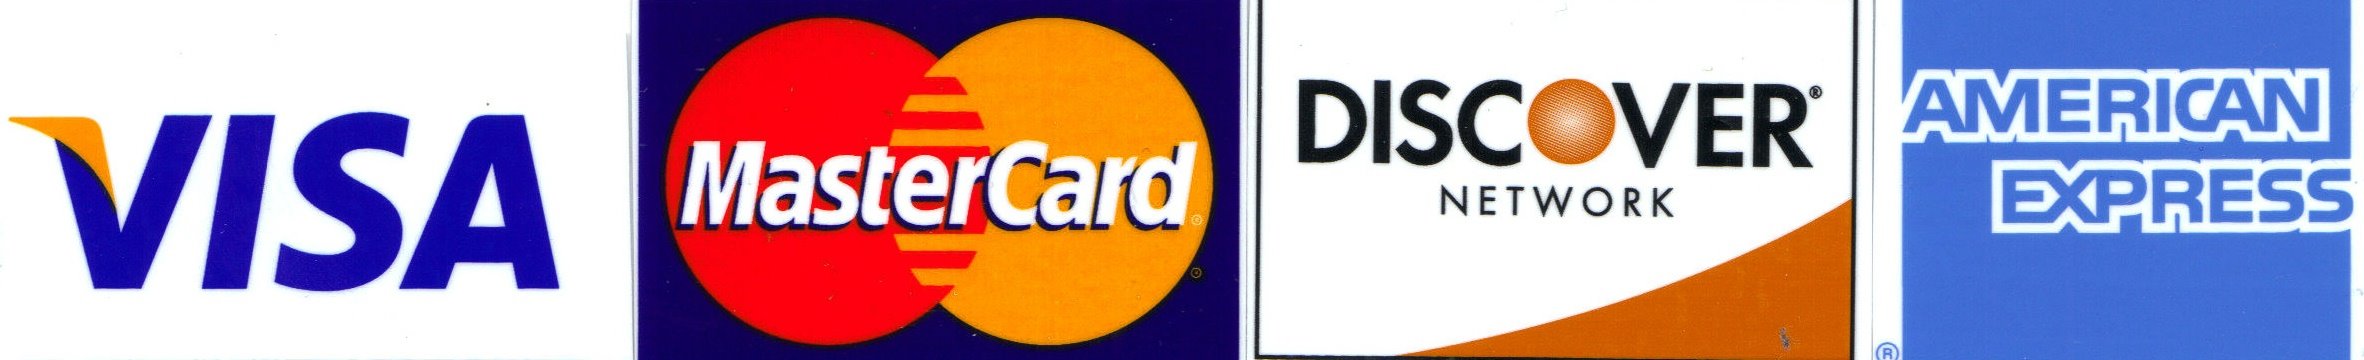 Credit Card Sales for Registration and Meals